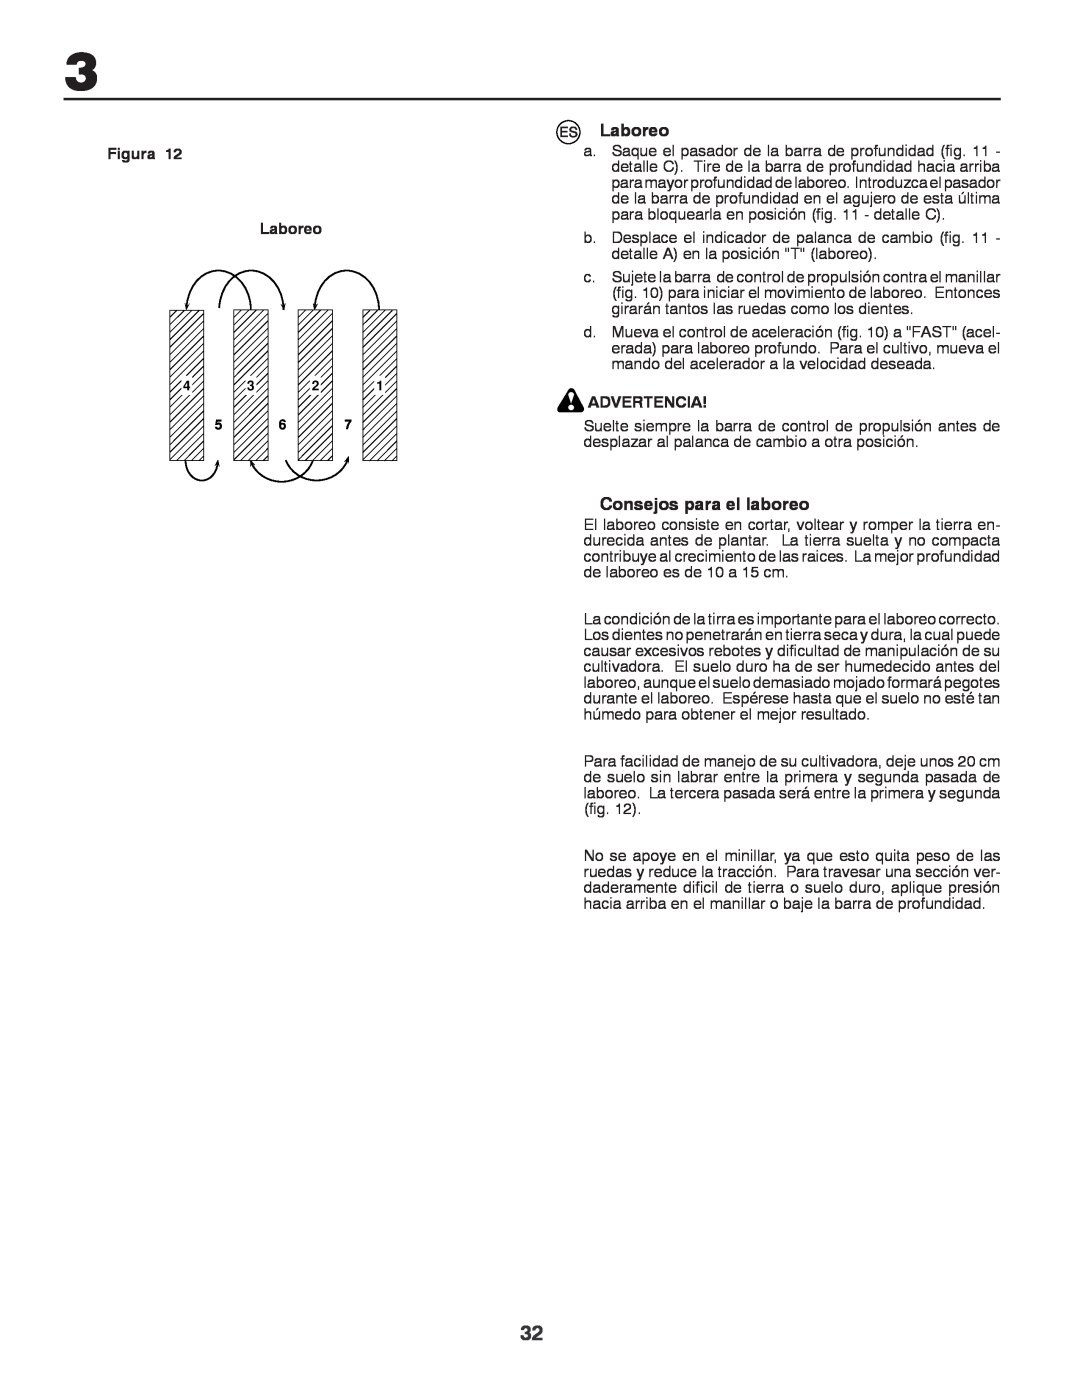 Husqvarna CRT81 instruction manual Consejos para el laboreo, Figura Laboreo, Advertencia 